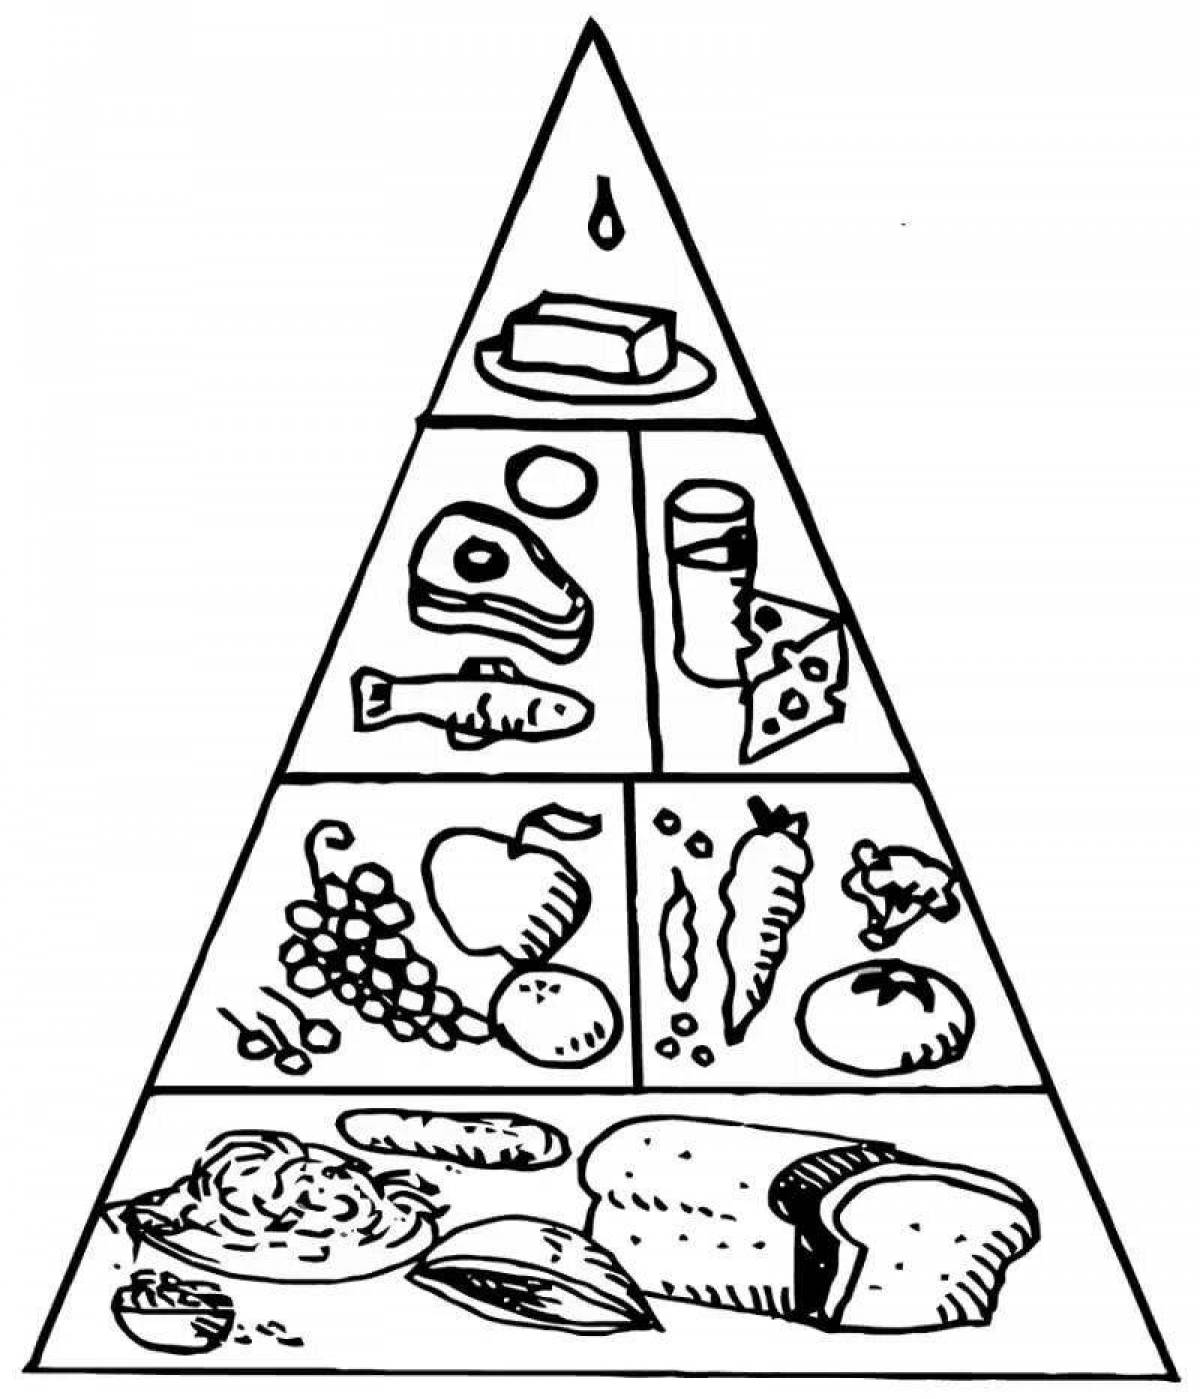 Food pyramid #4